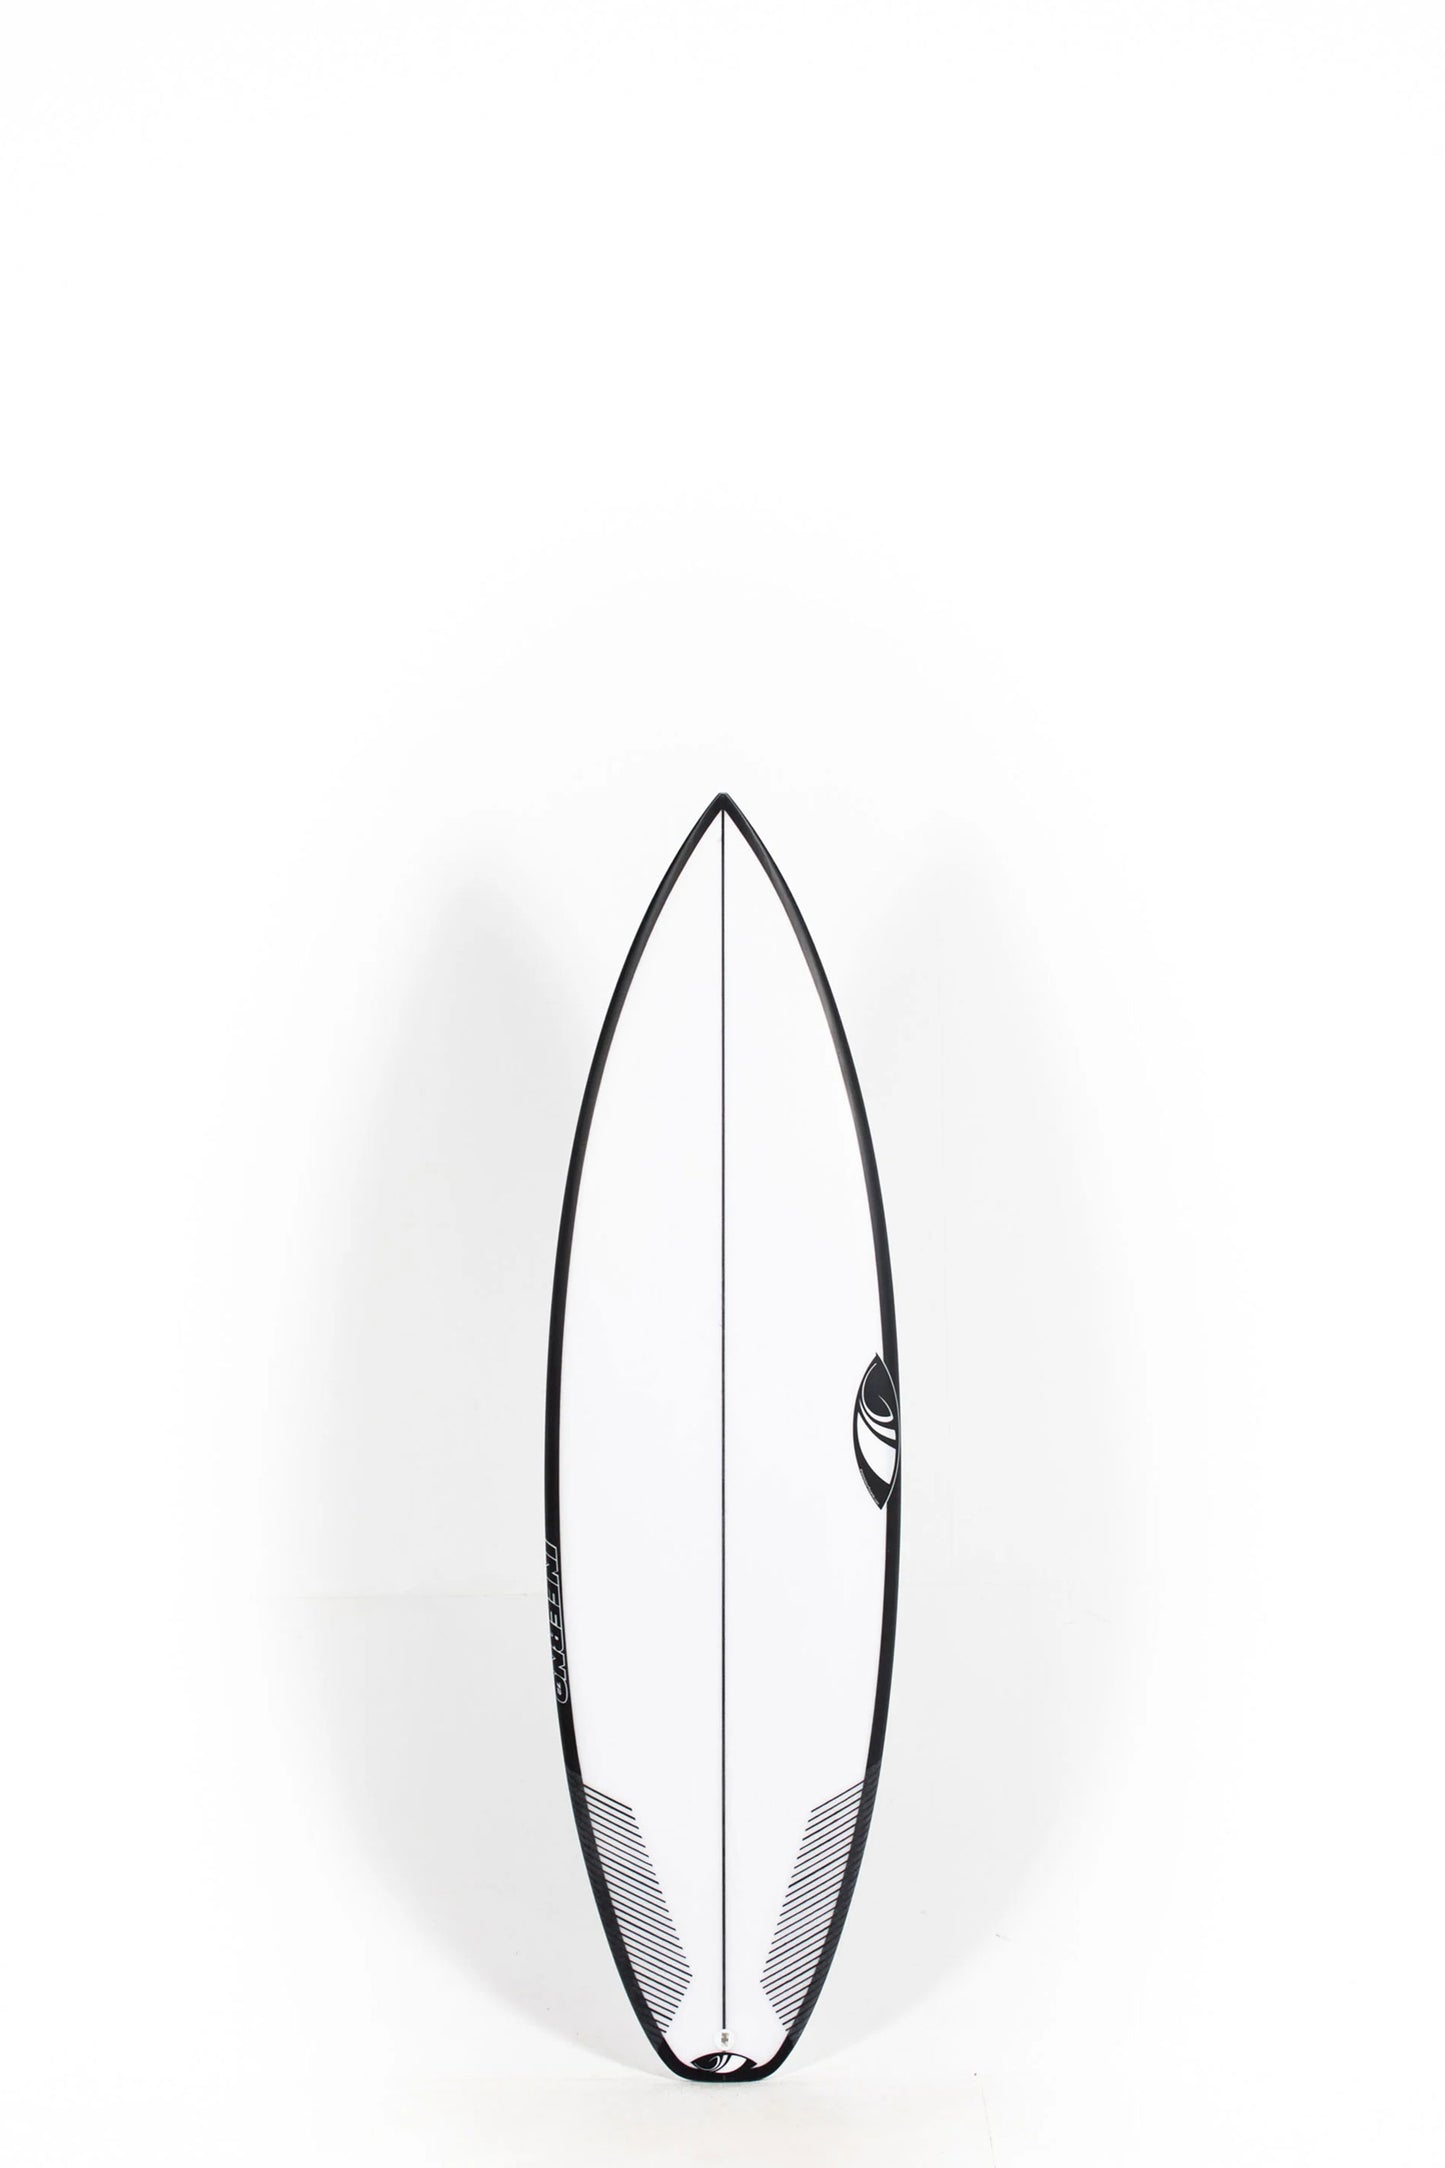     Pukas-Surf-Shop-Sharpeye-Surfboards-Inferno-Marcio